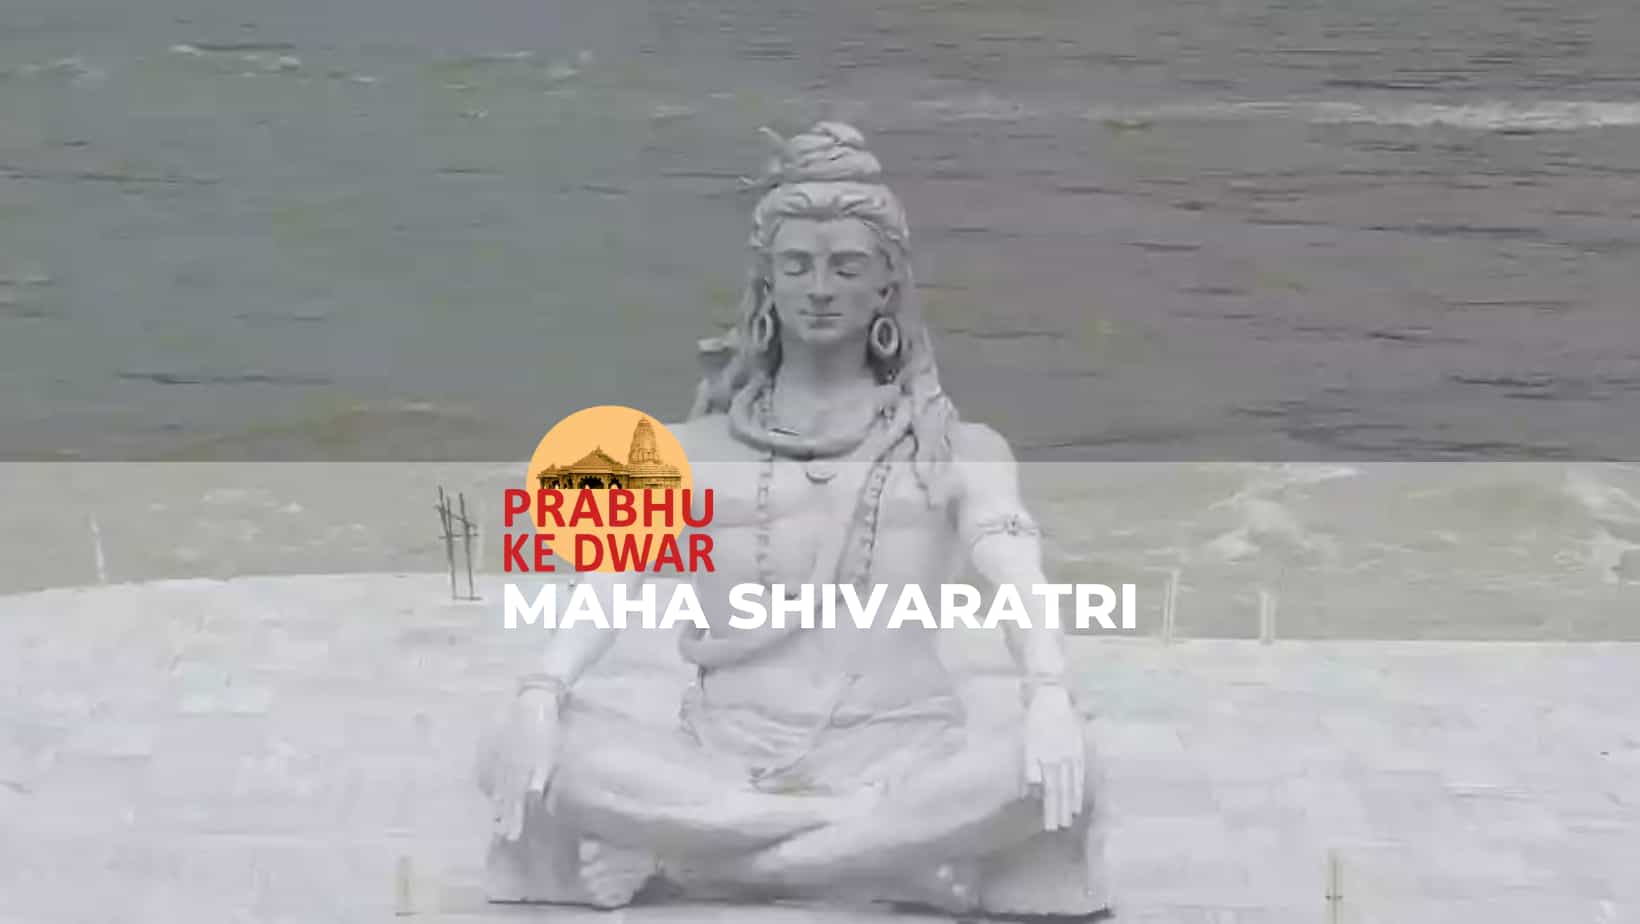 Story behind the Biggest Festival for the Devotee of Lord Shiva: Celebrating Maha Shivaratri